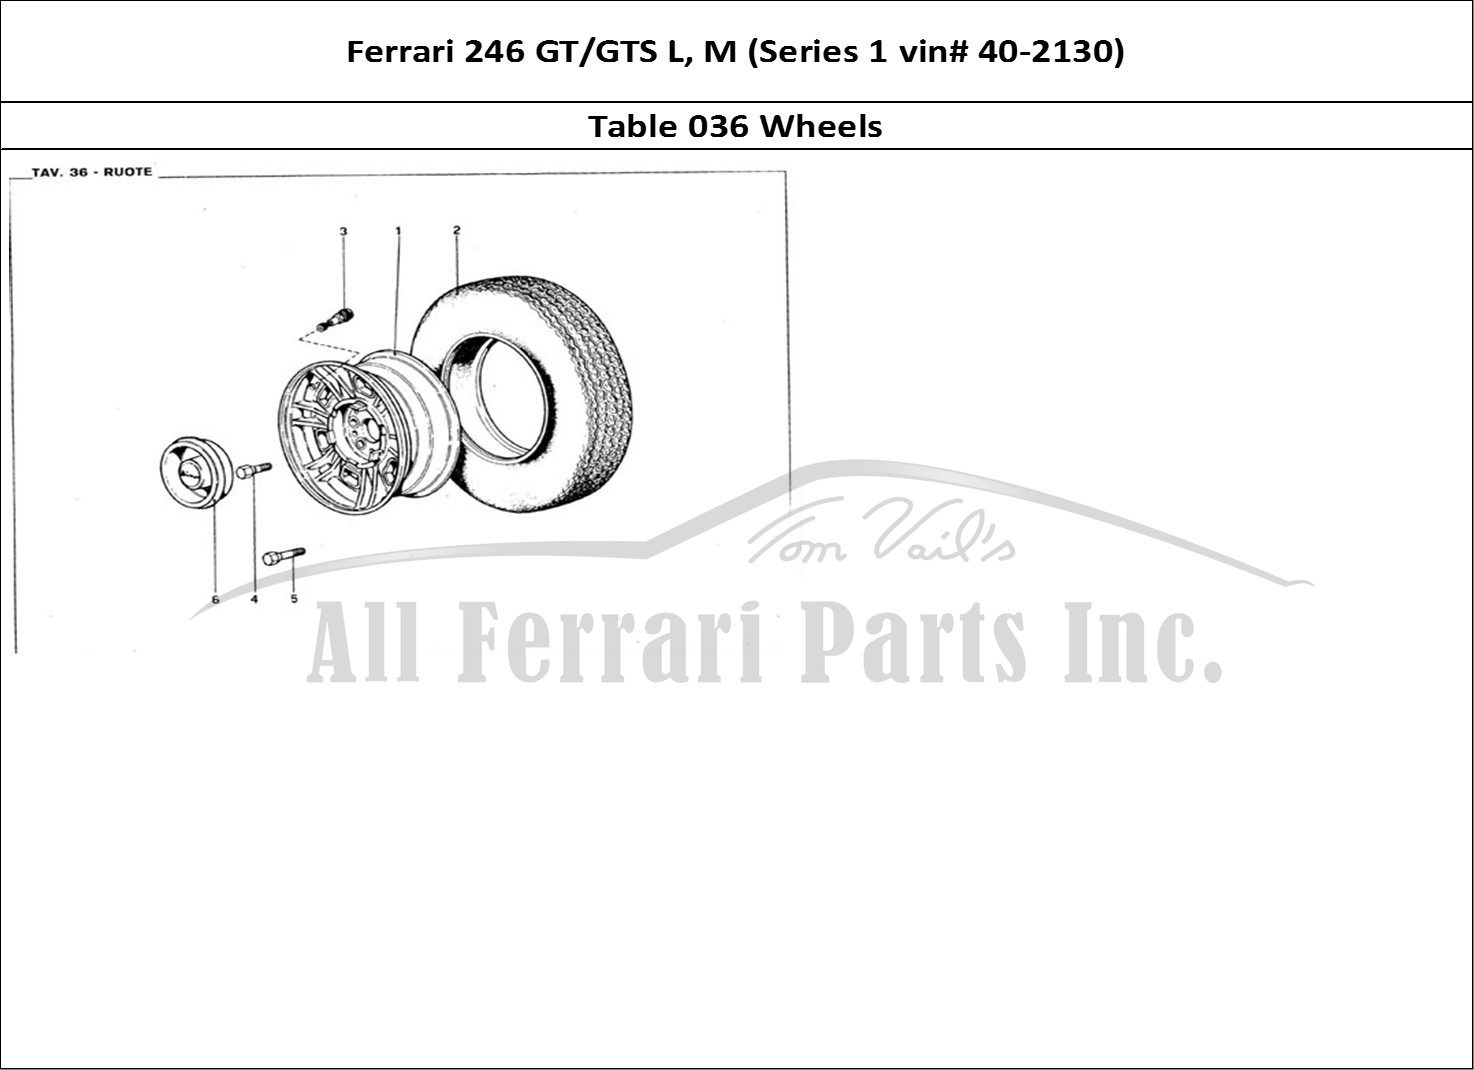 Ferrari Parts Ferrari 246 GT Series 1 Page 036 Wheels